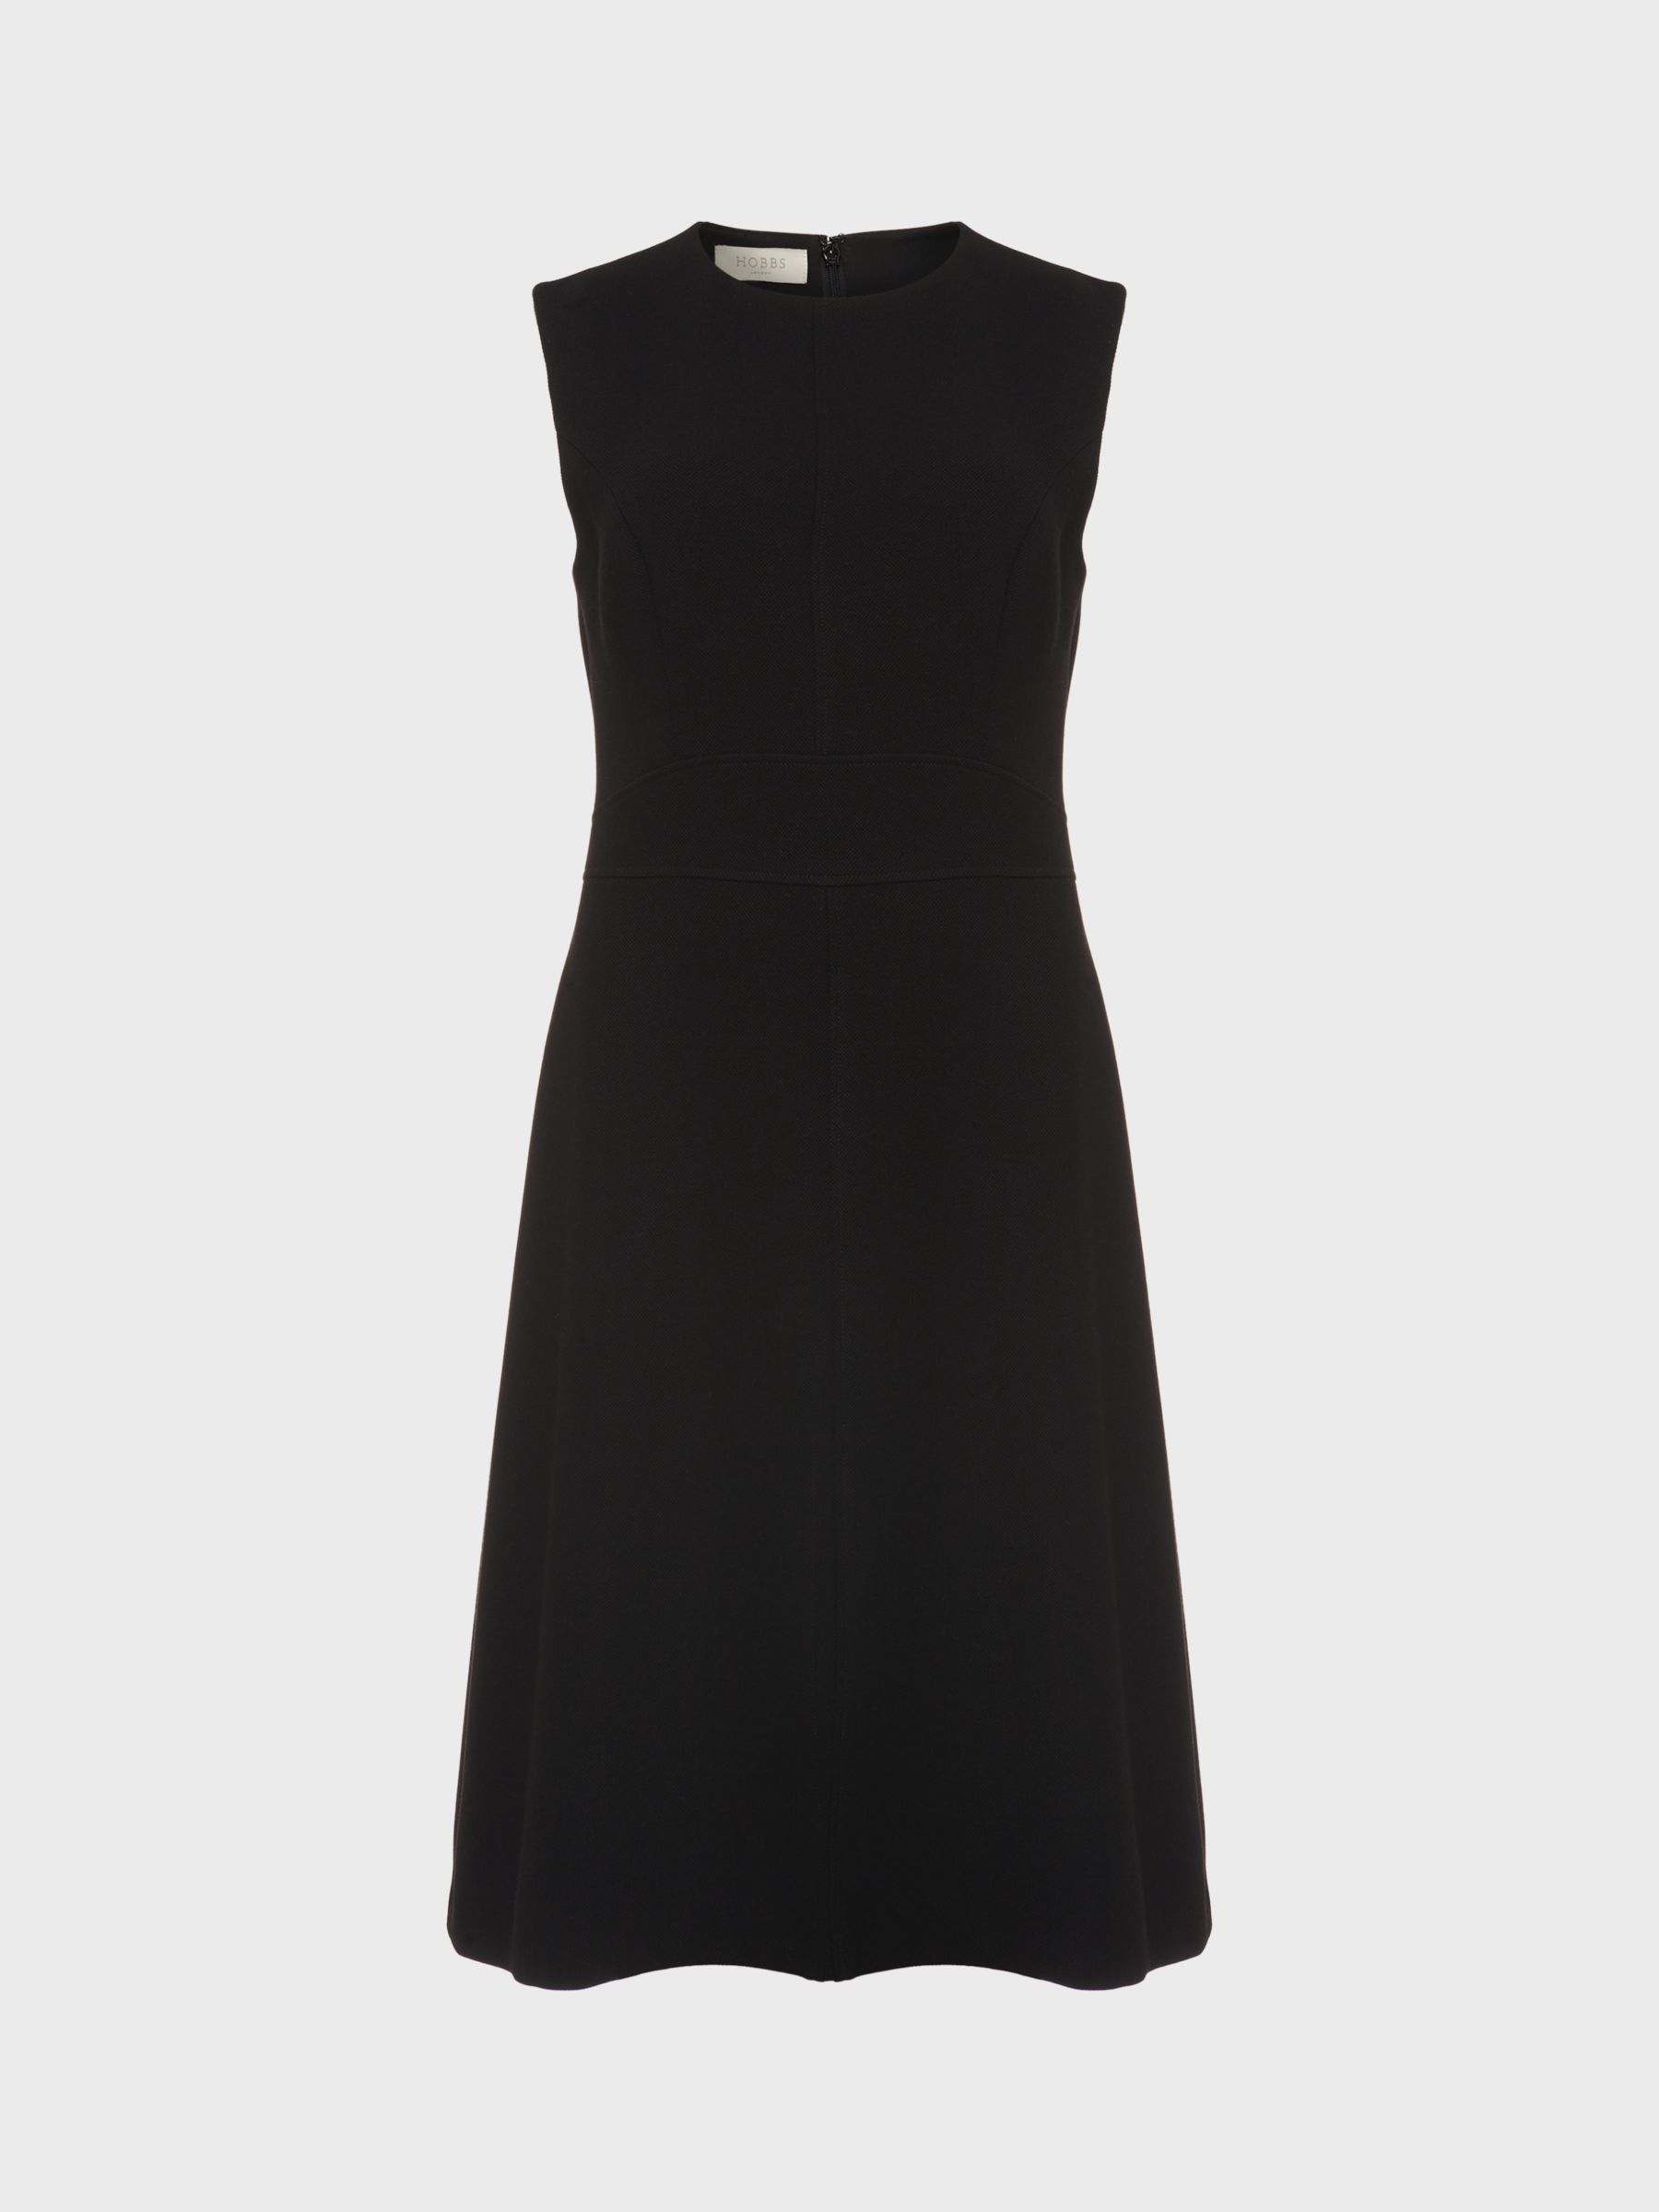 Hobbs Petite Ophelia Sleeveless Dress, Black at John Lewis & Partners